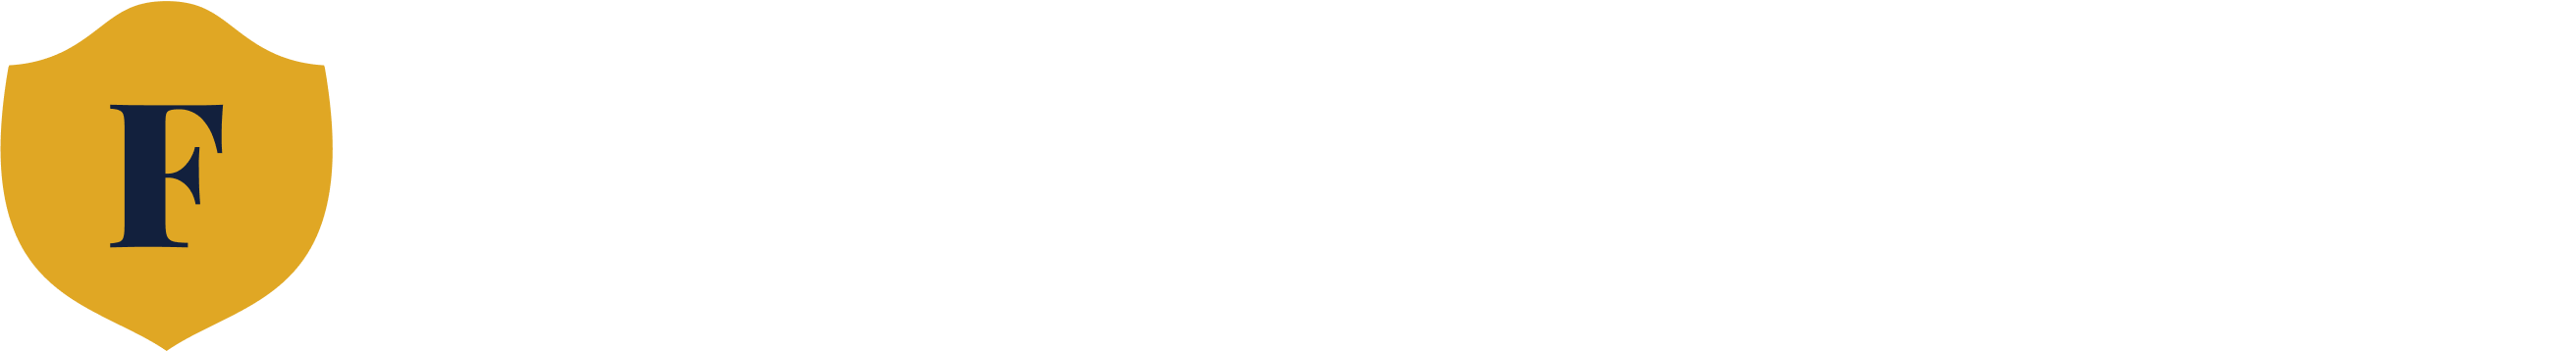 The Freeport Society logo